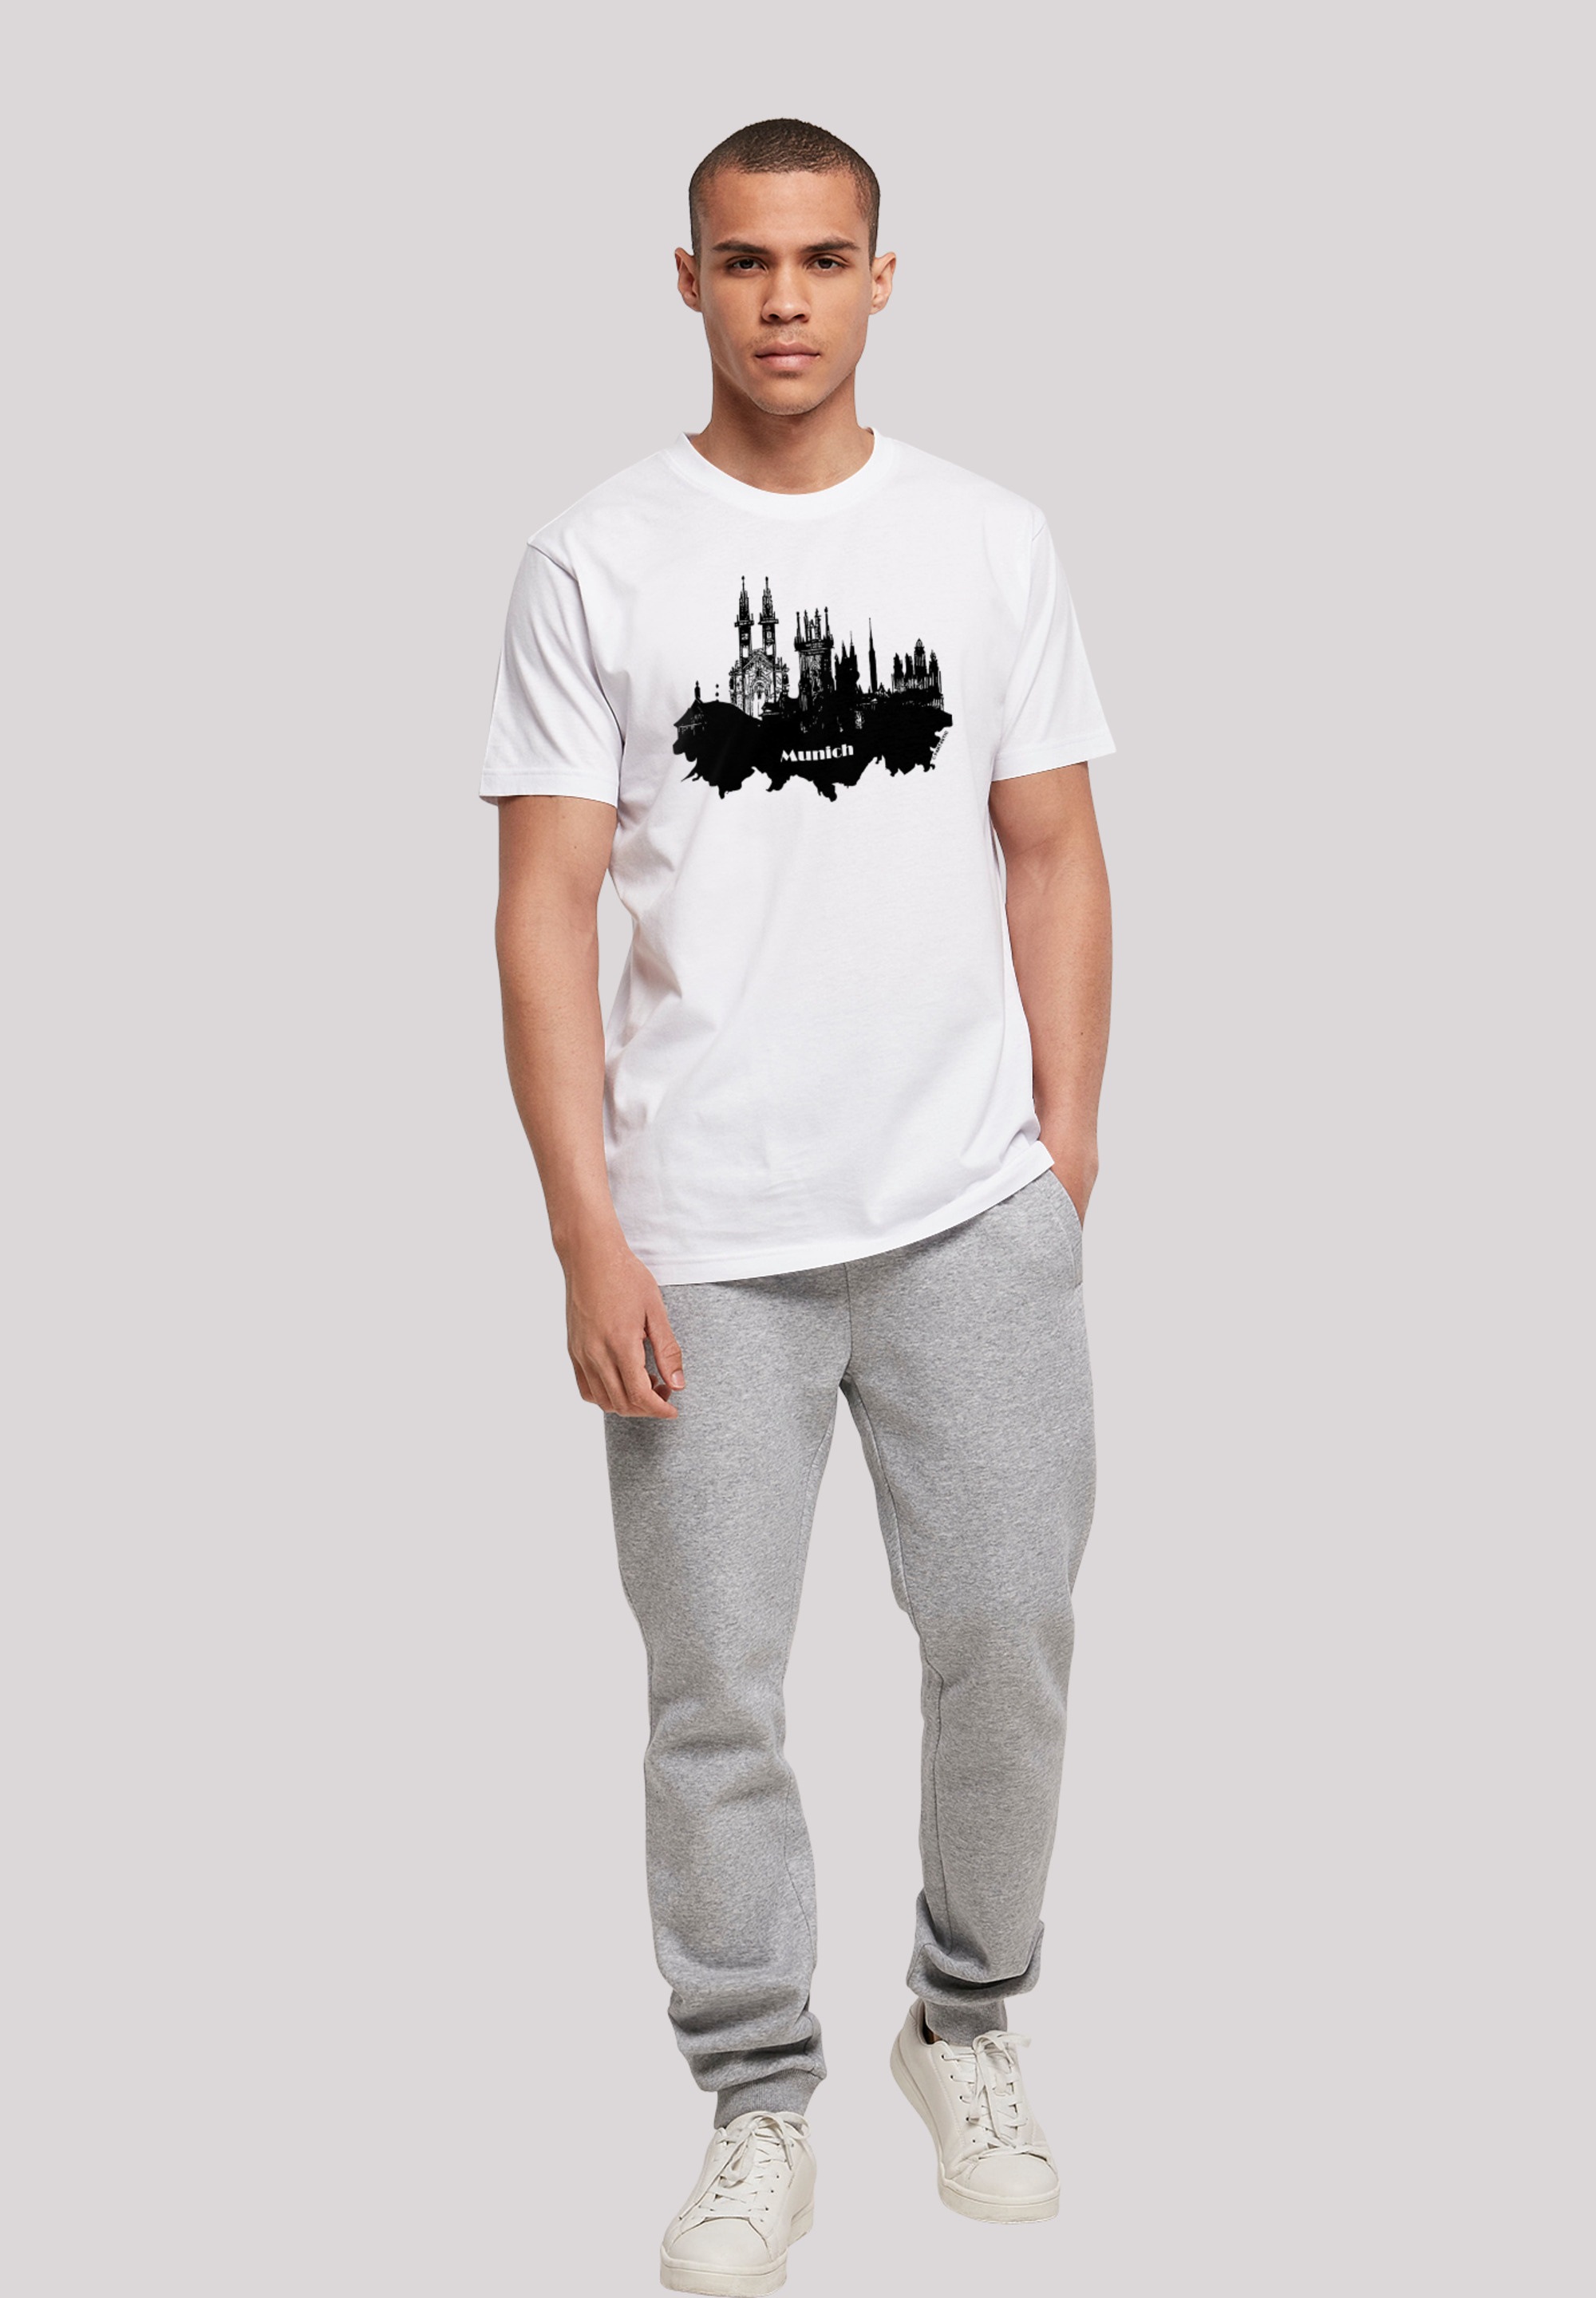 F4NT4STIC T-Shirt »Cities Collection - Munich skyline«, Print